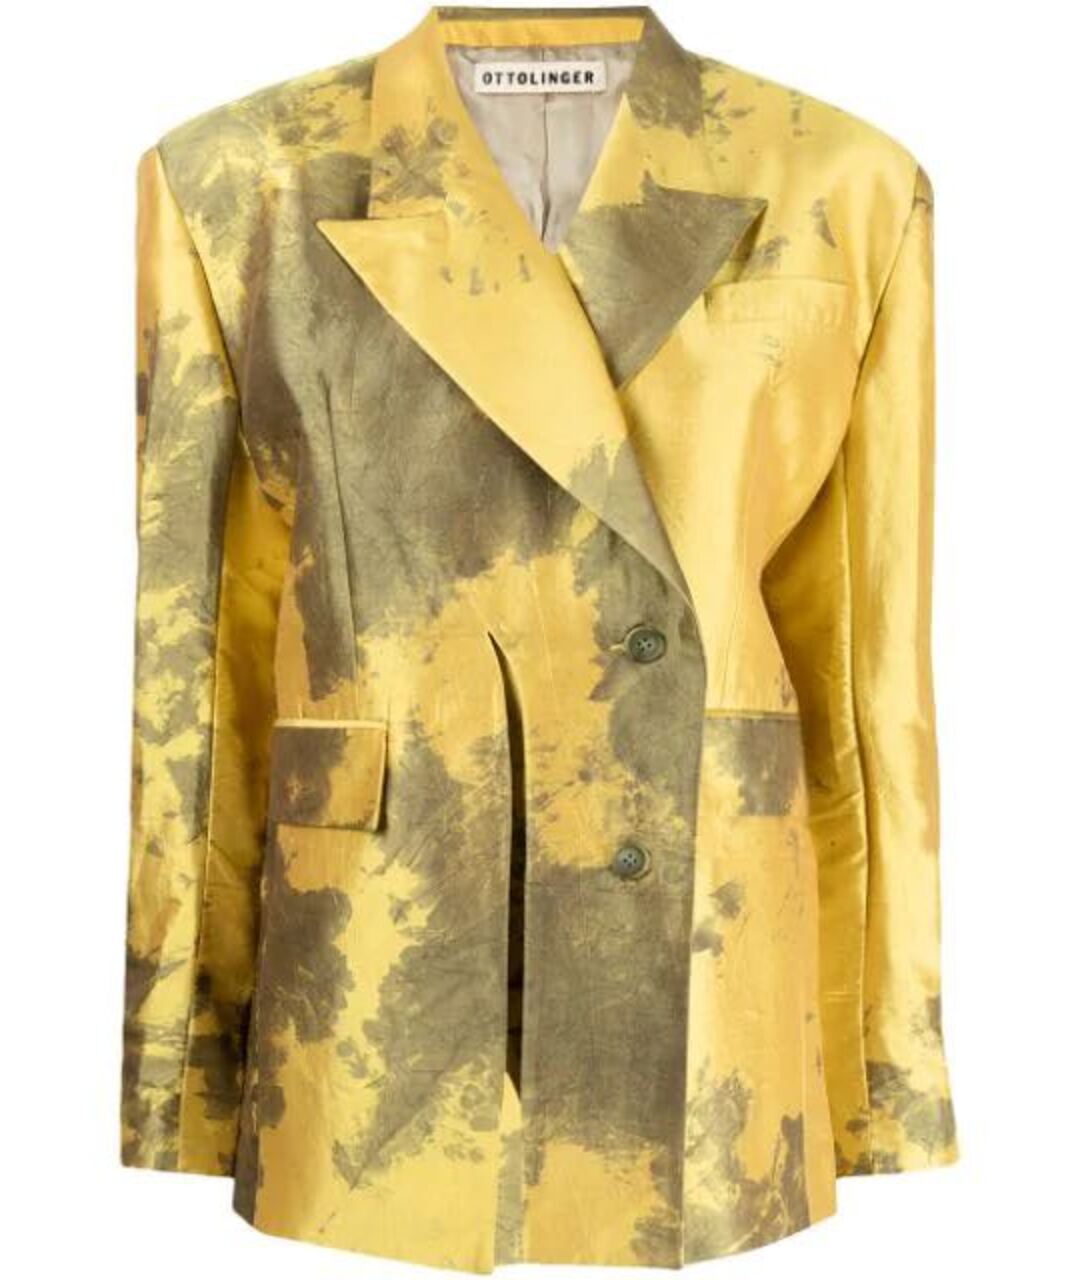 OTTOLINGER Желтый шелковый жакет/пиджак, фото 1